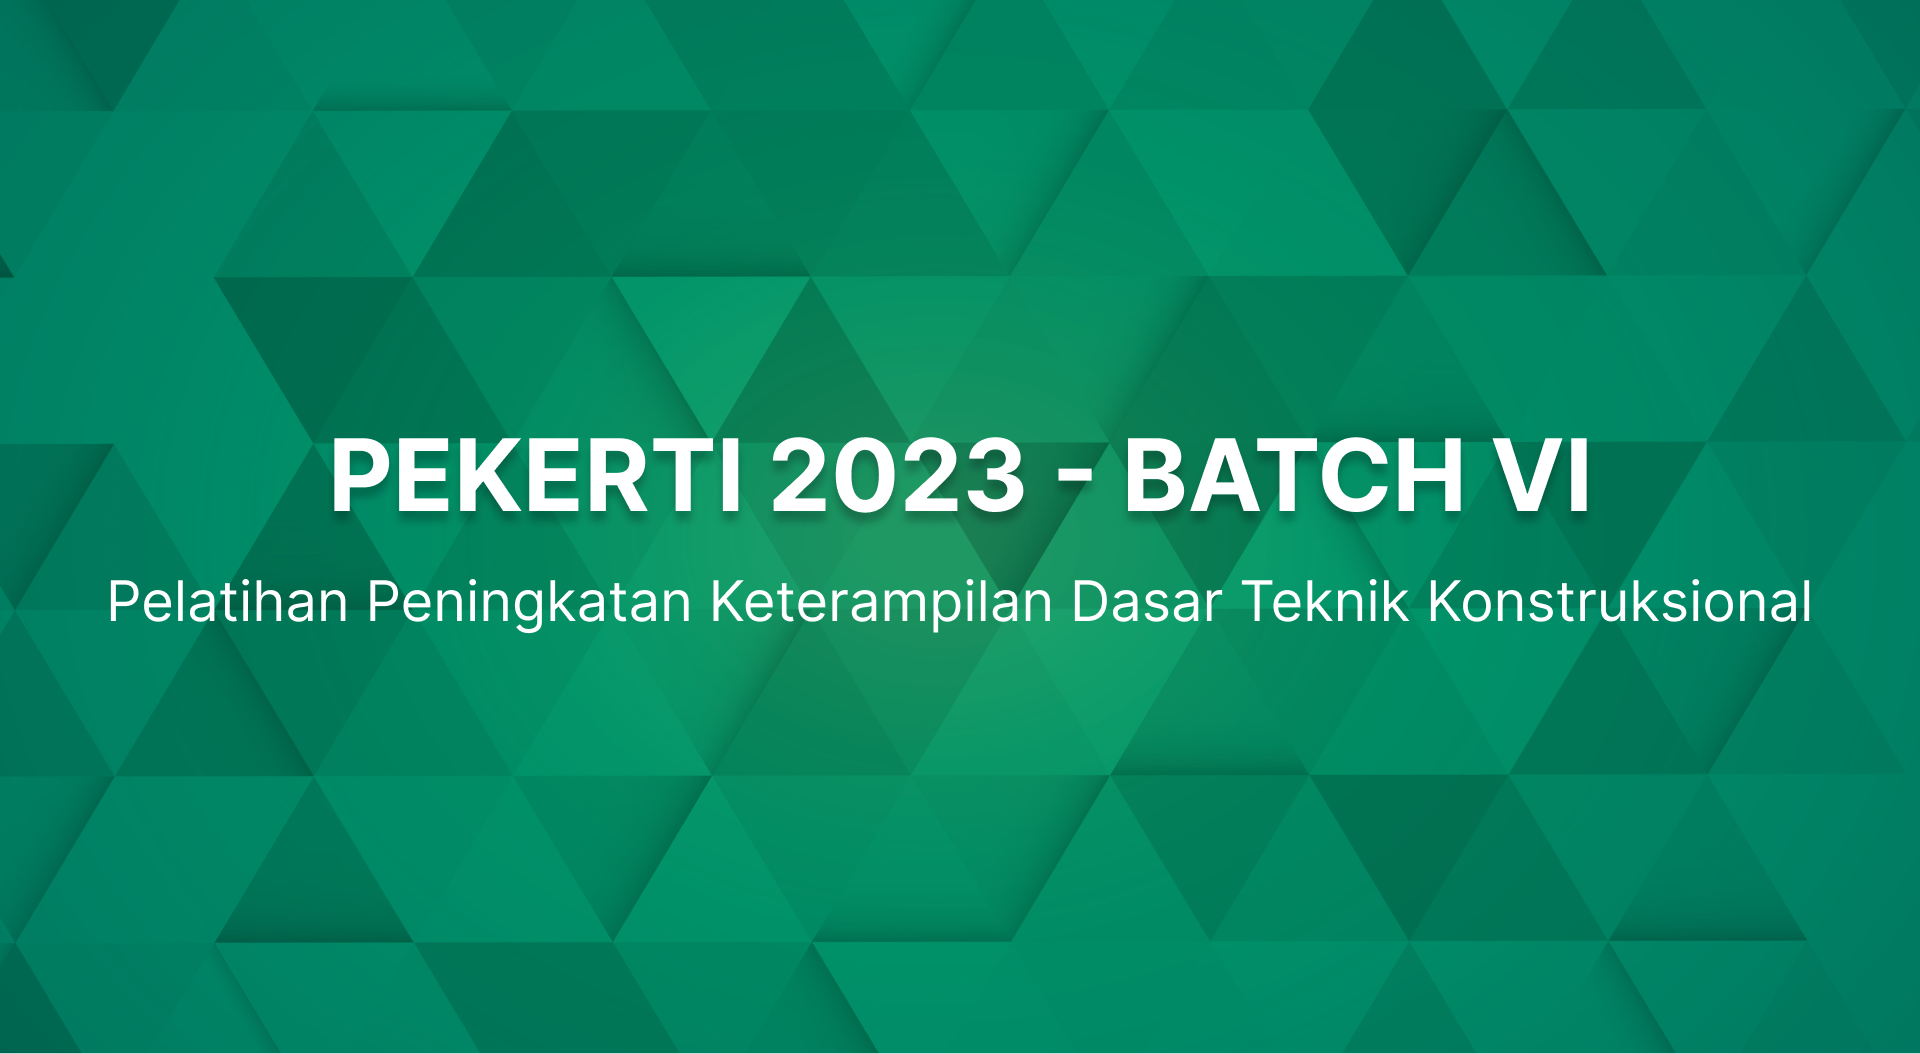 PEKERTI 2023 - BATCH VI